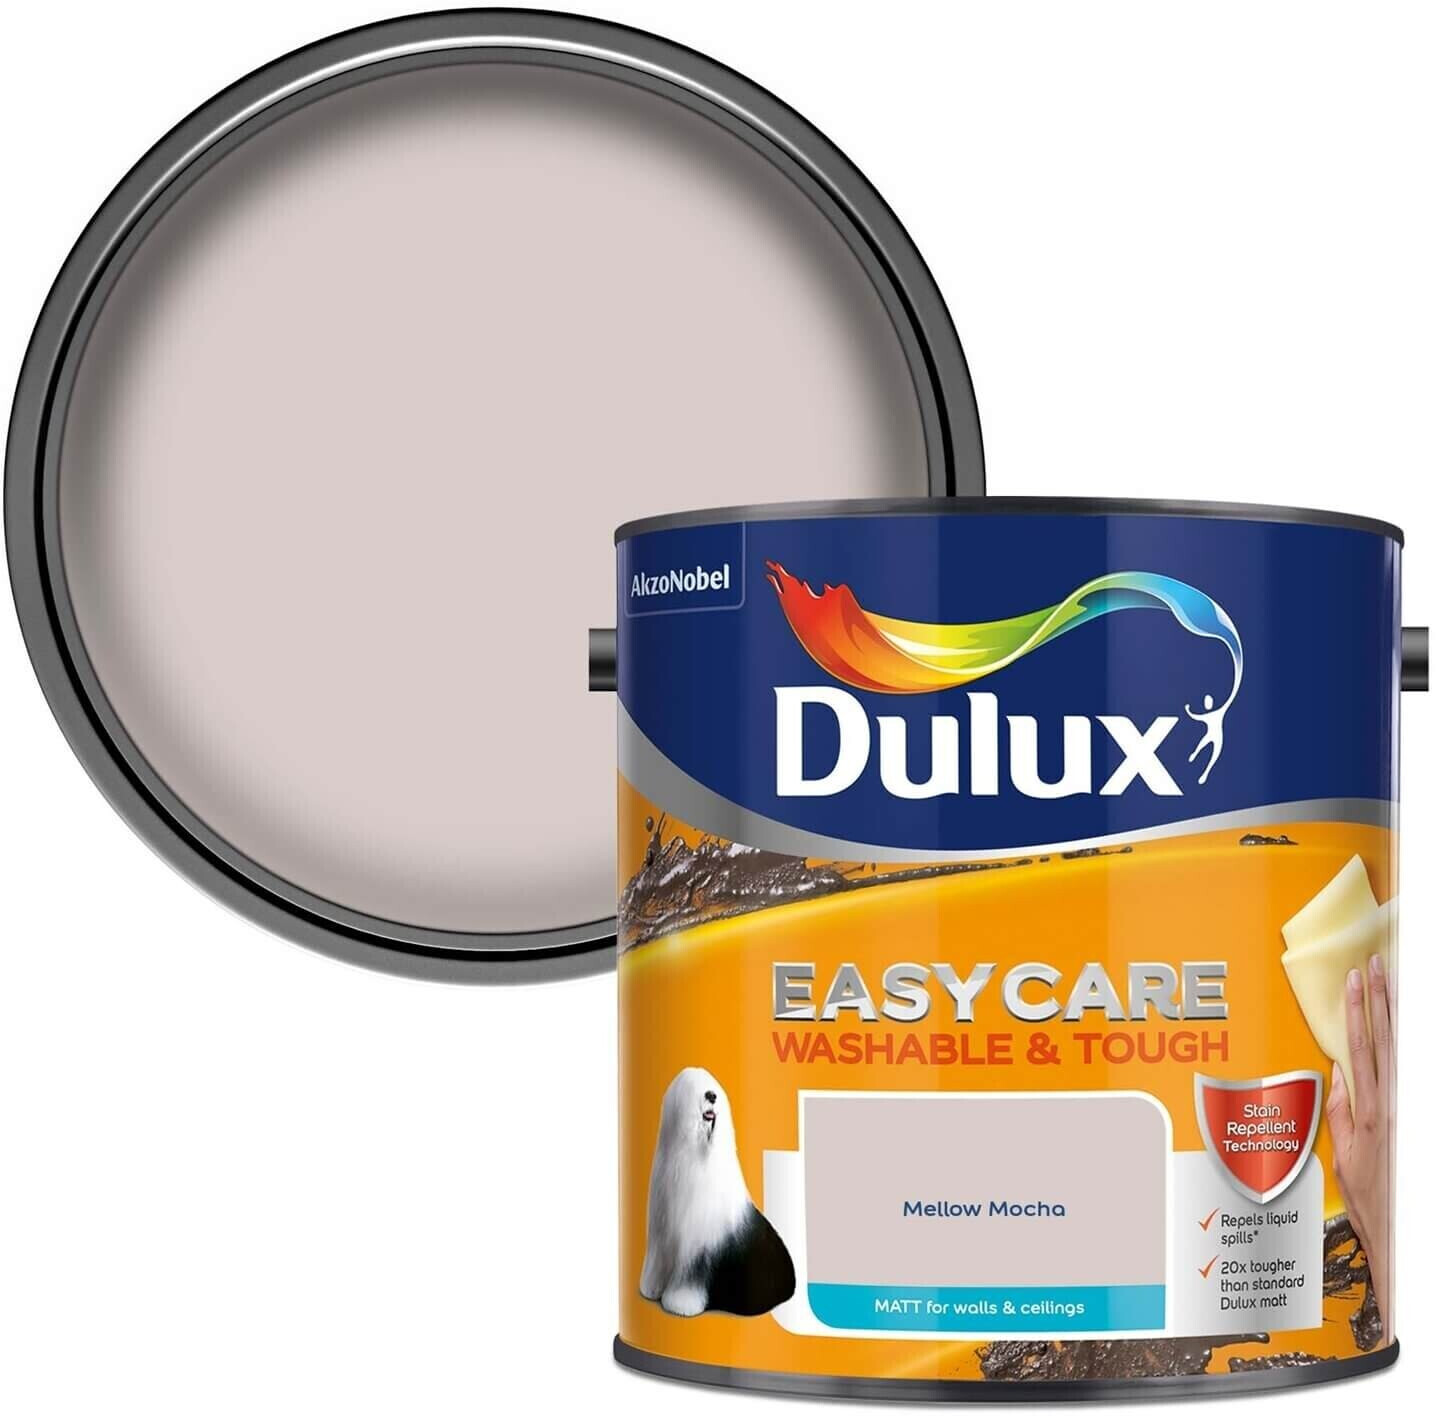 Buy Dulux Easycare Washable & Tough Mellow Mocha Matt